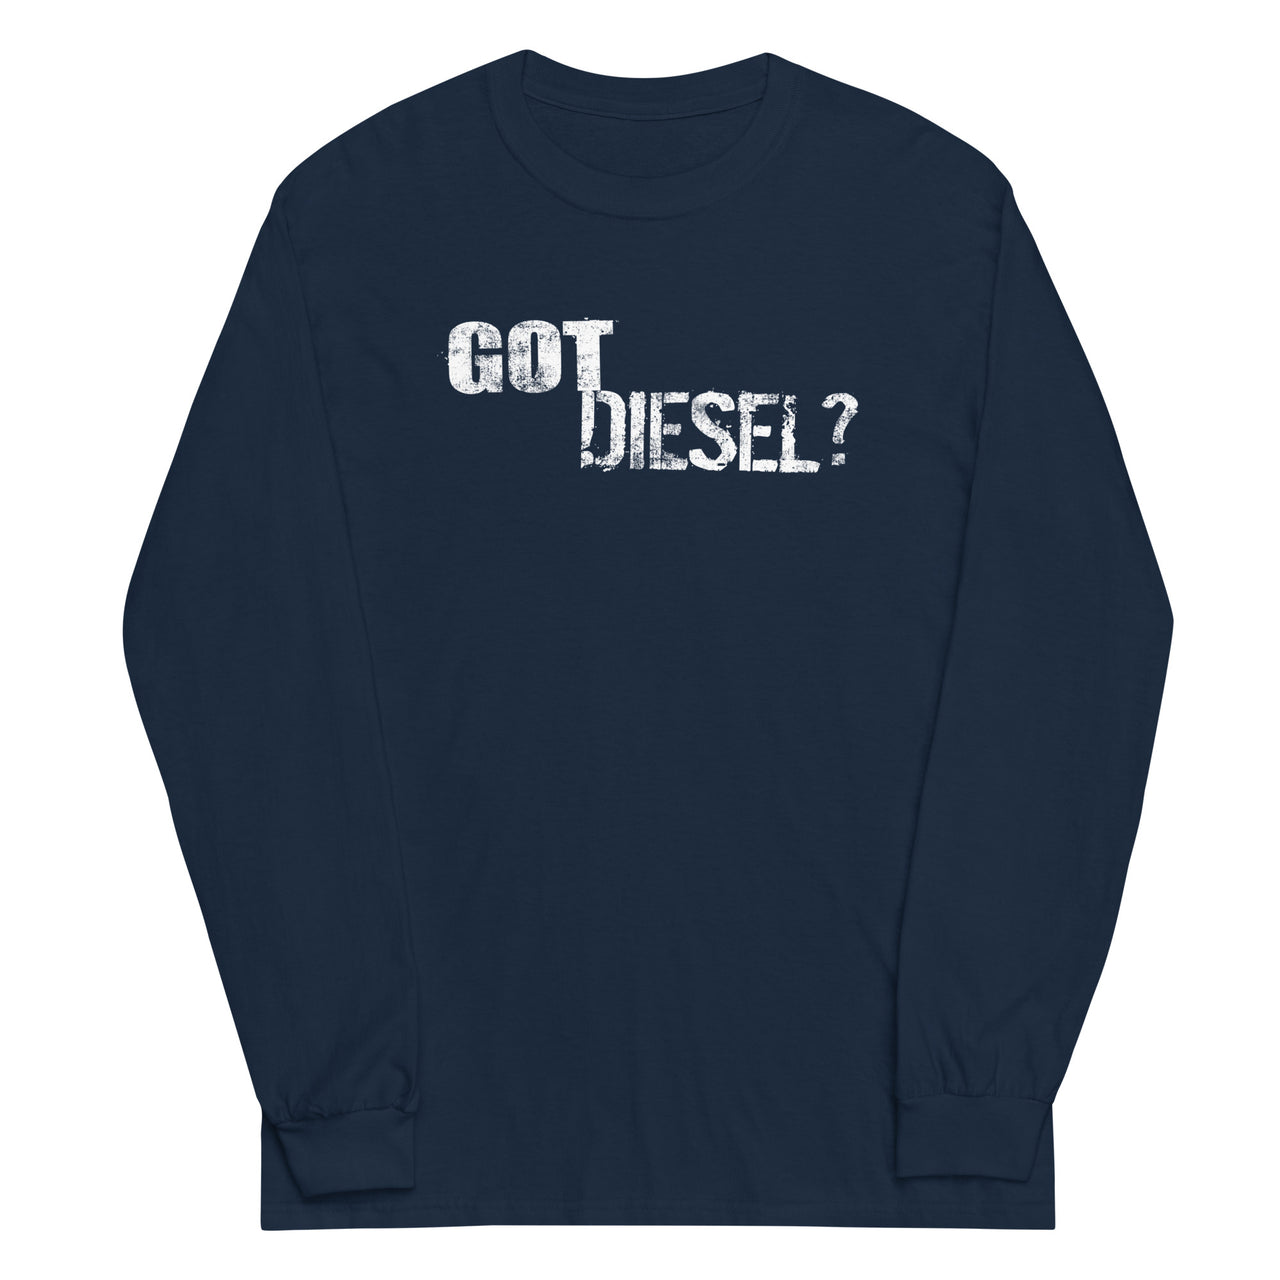 Got Diesel? Long Sleeve Shirt in navy